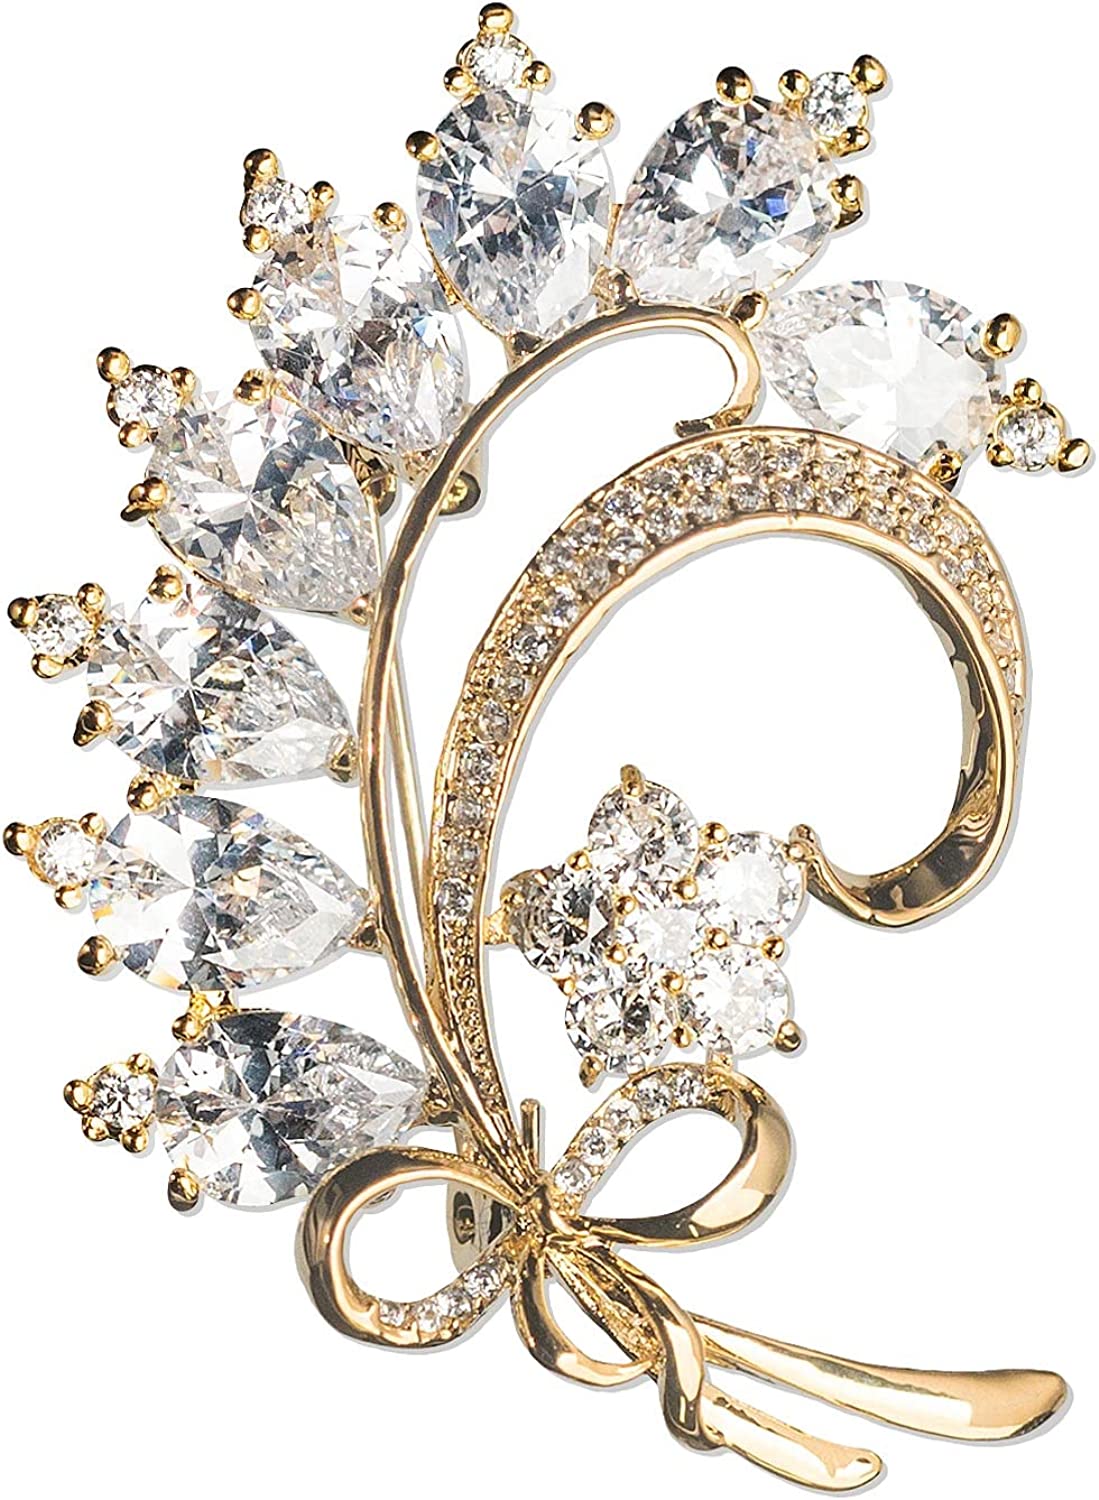 Wooinfeny Women's Austrian Crystal Wedding Party Brooch, Premium Sparkling Rhinestone, Shiny Cristal, Handicraft, Golden